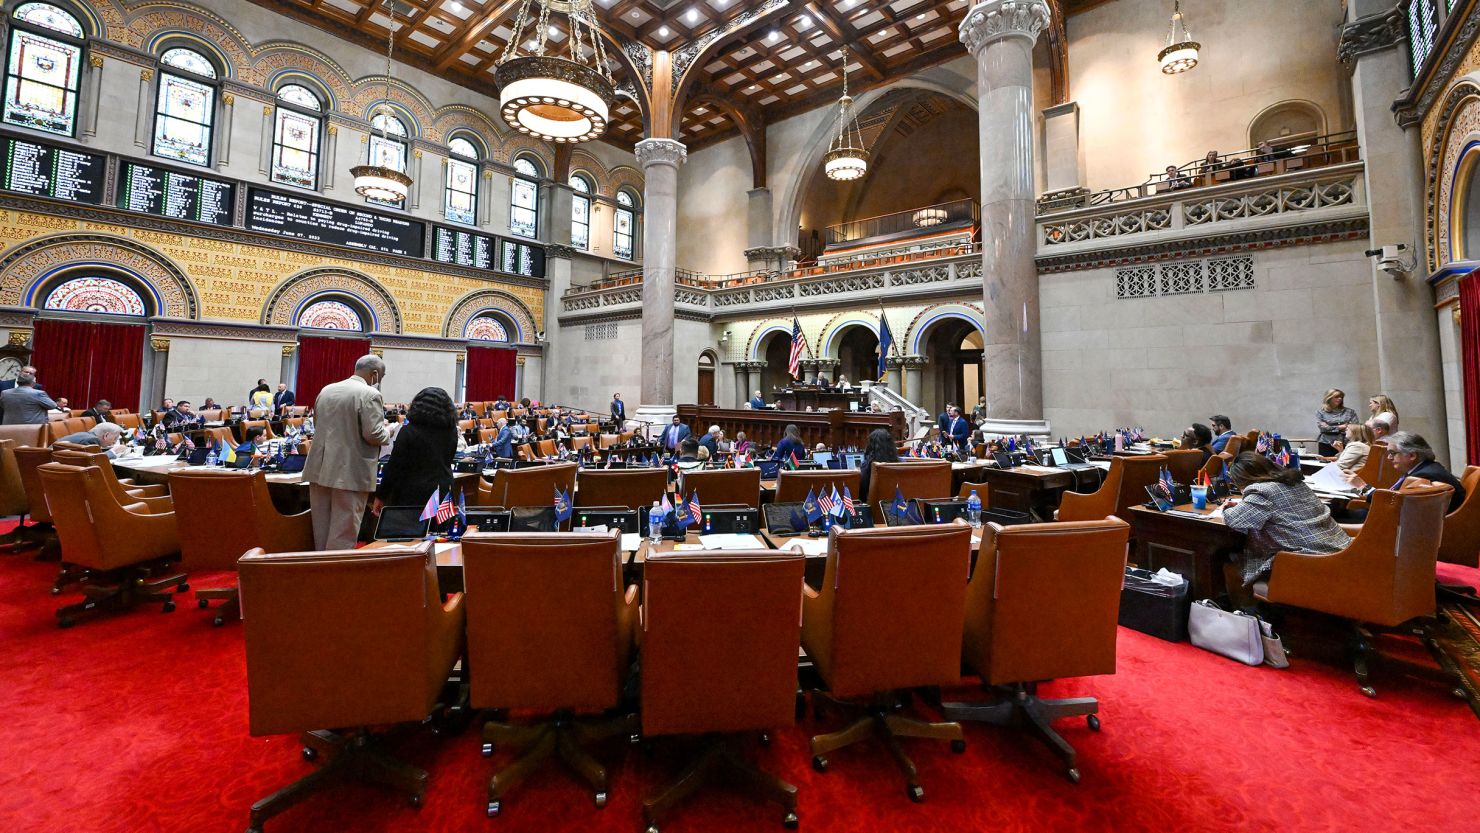 The New York state Assembly members debate legislative bills at the state Capitol in Albany in June.